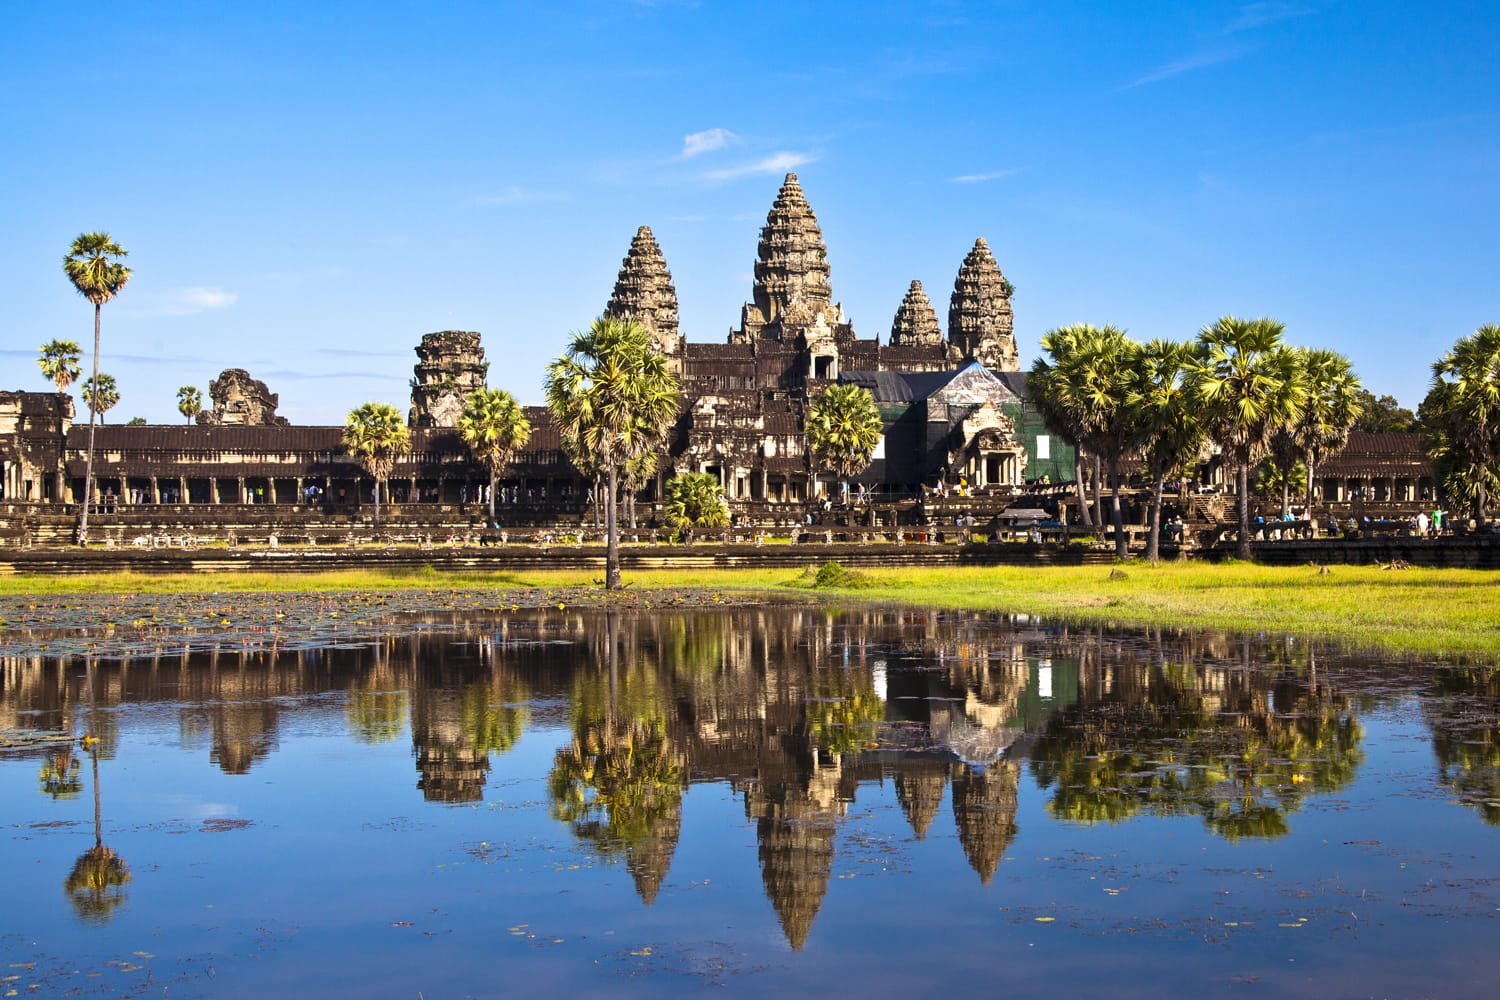 Angkor Wat seen across the lake, Cambodia